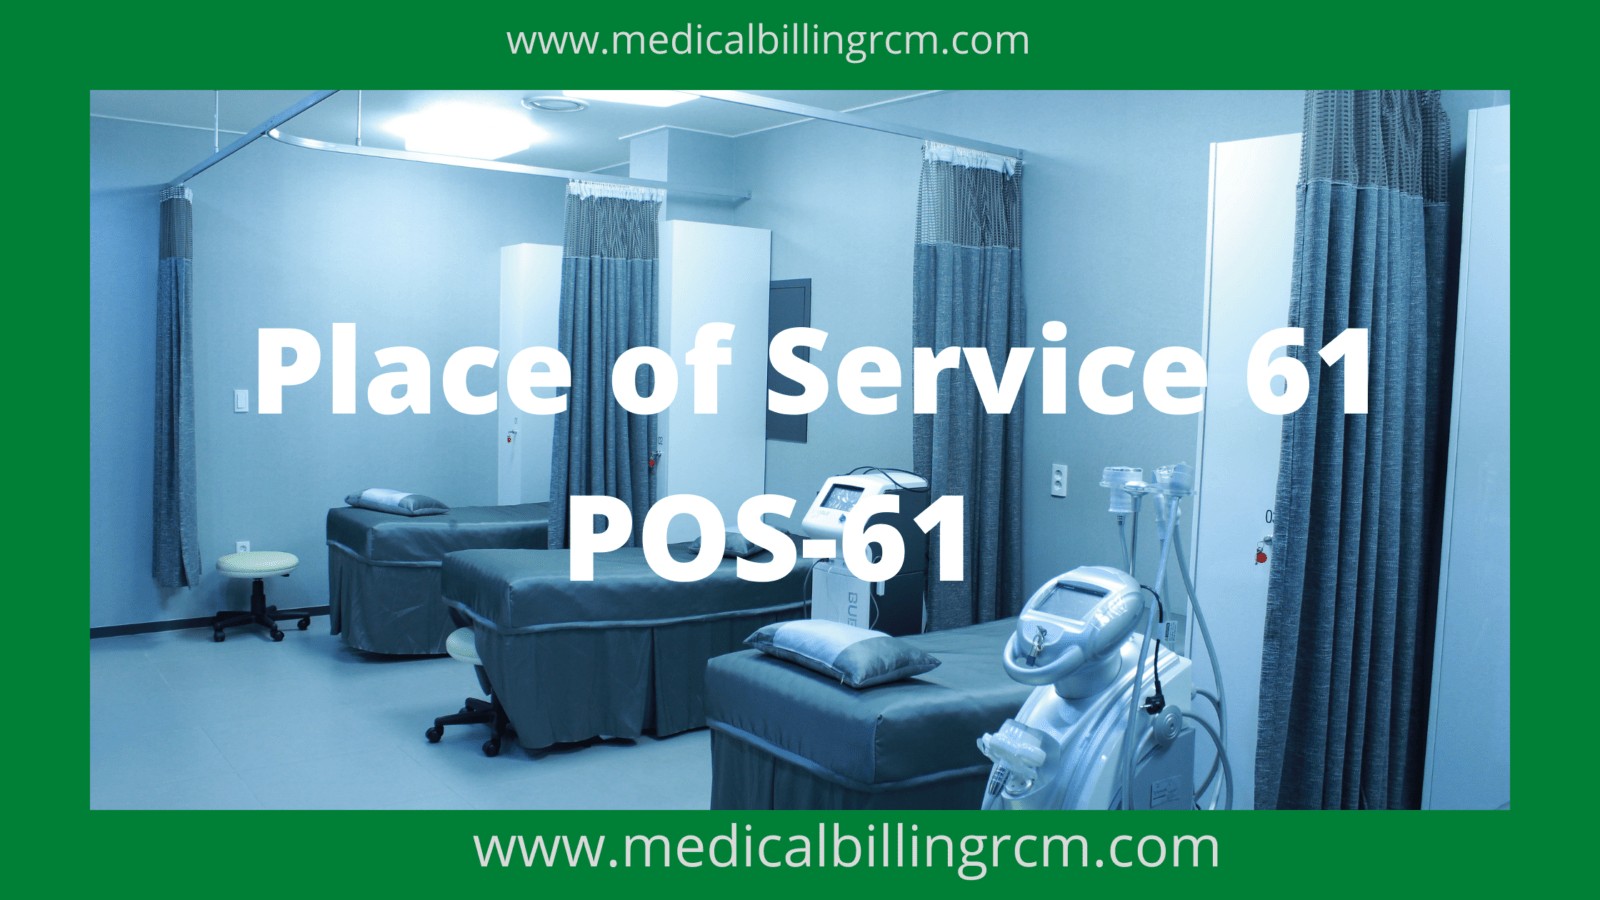 POS 61 in medical billing